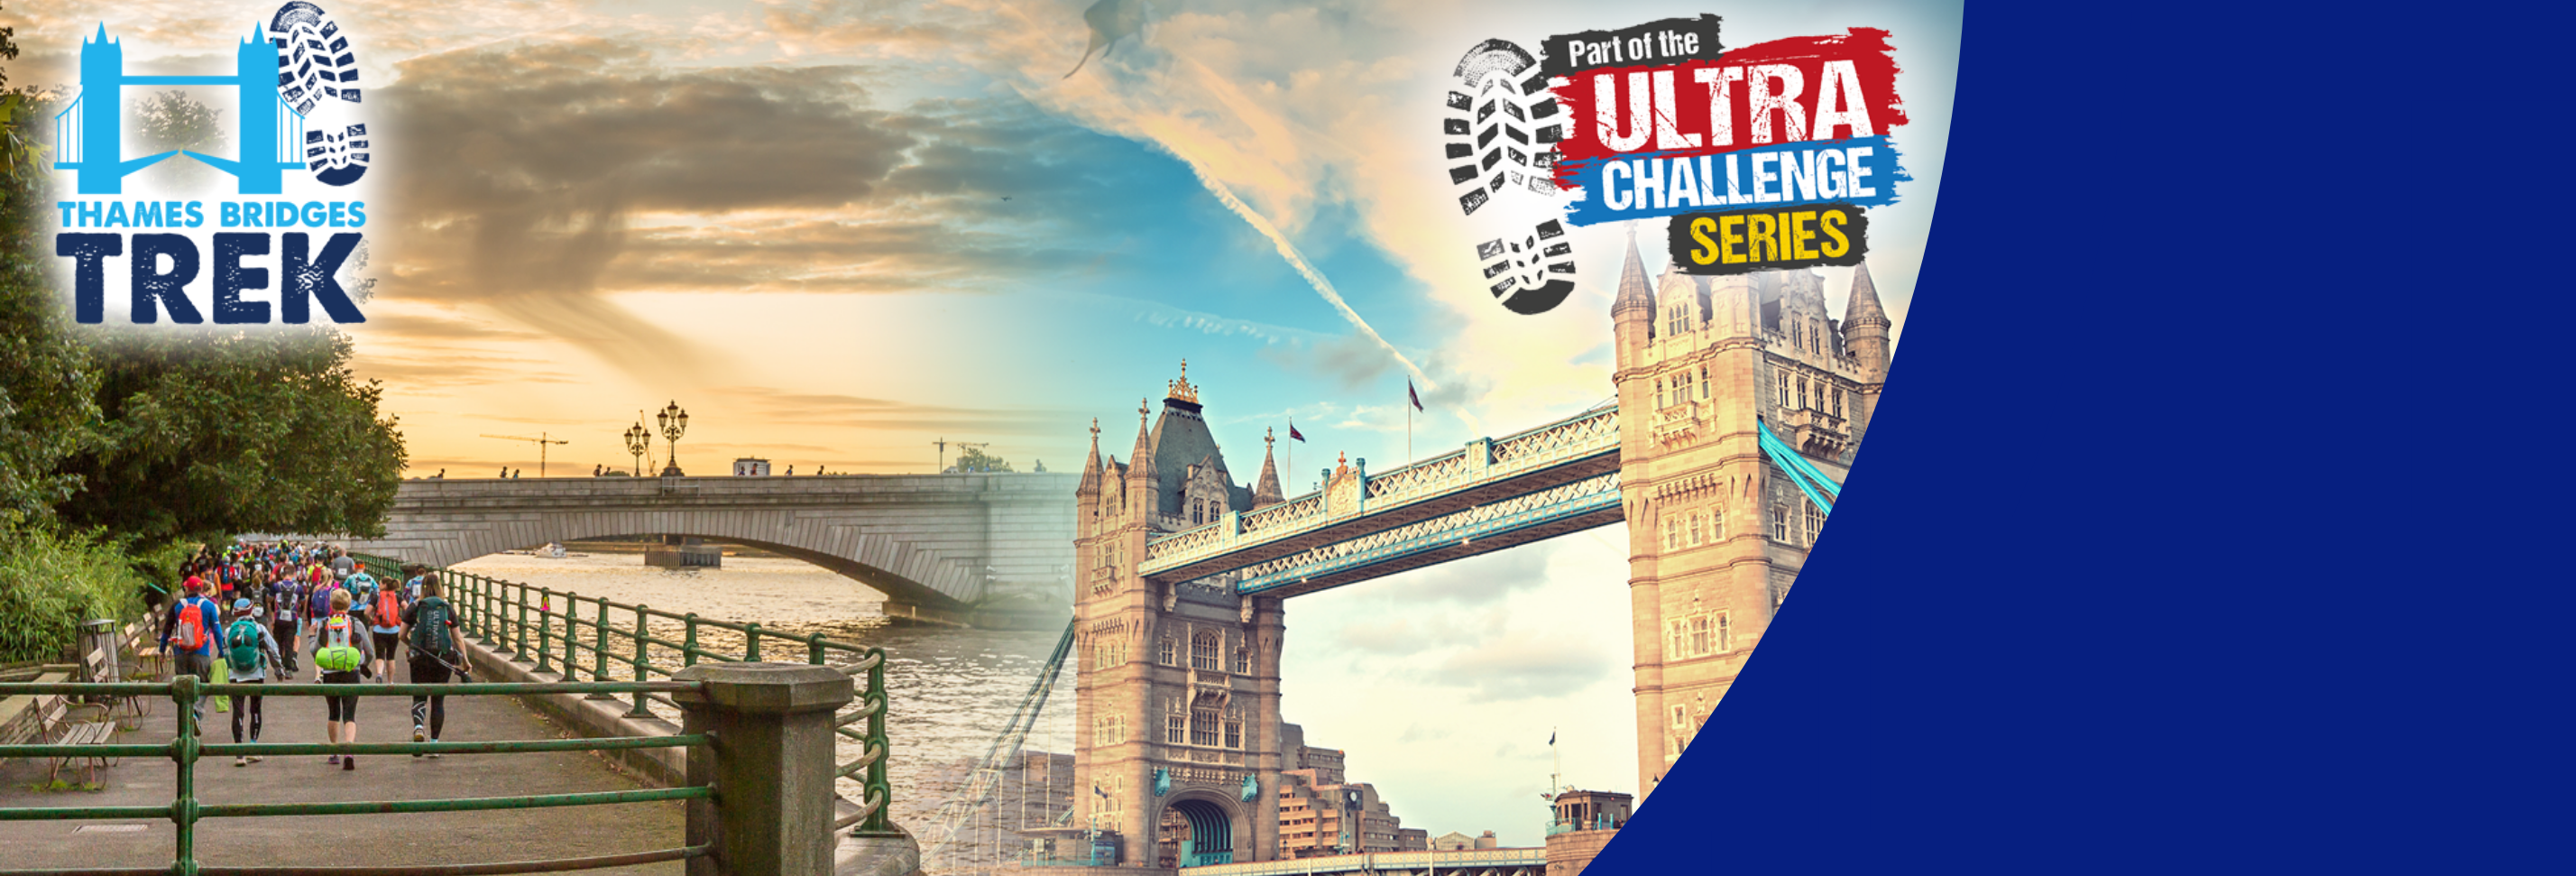 Image shows challengers running past Tower Bridge